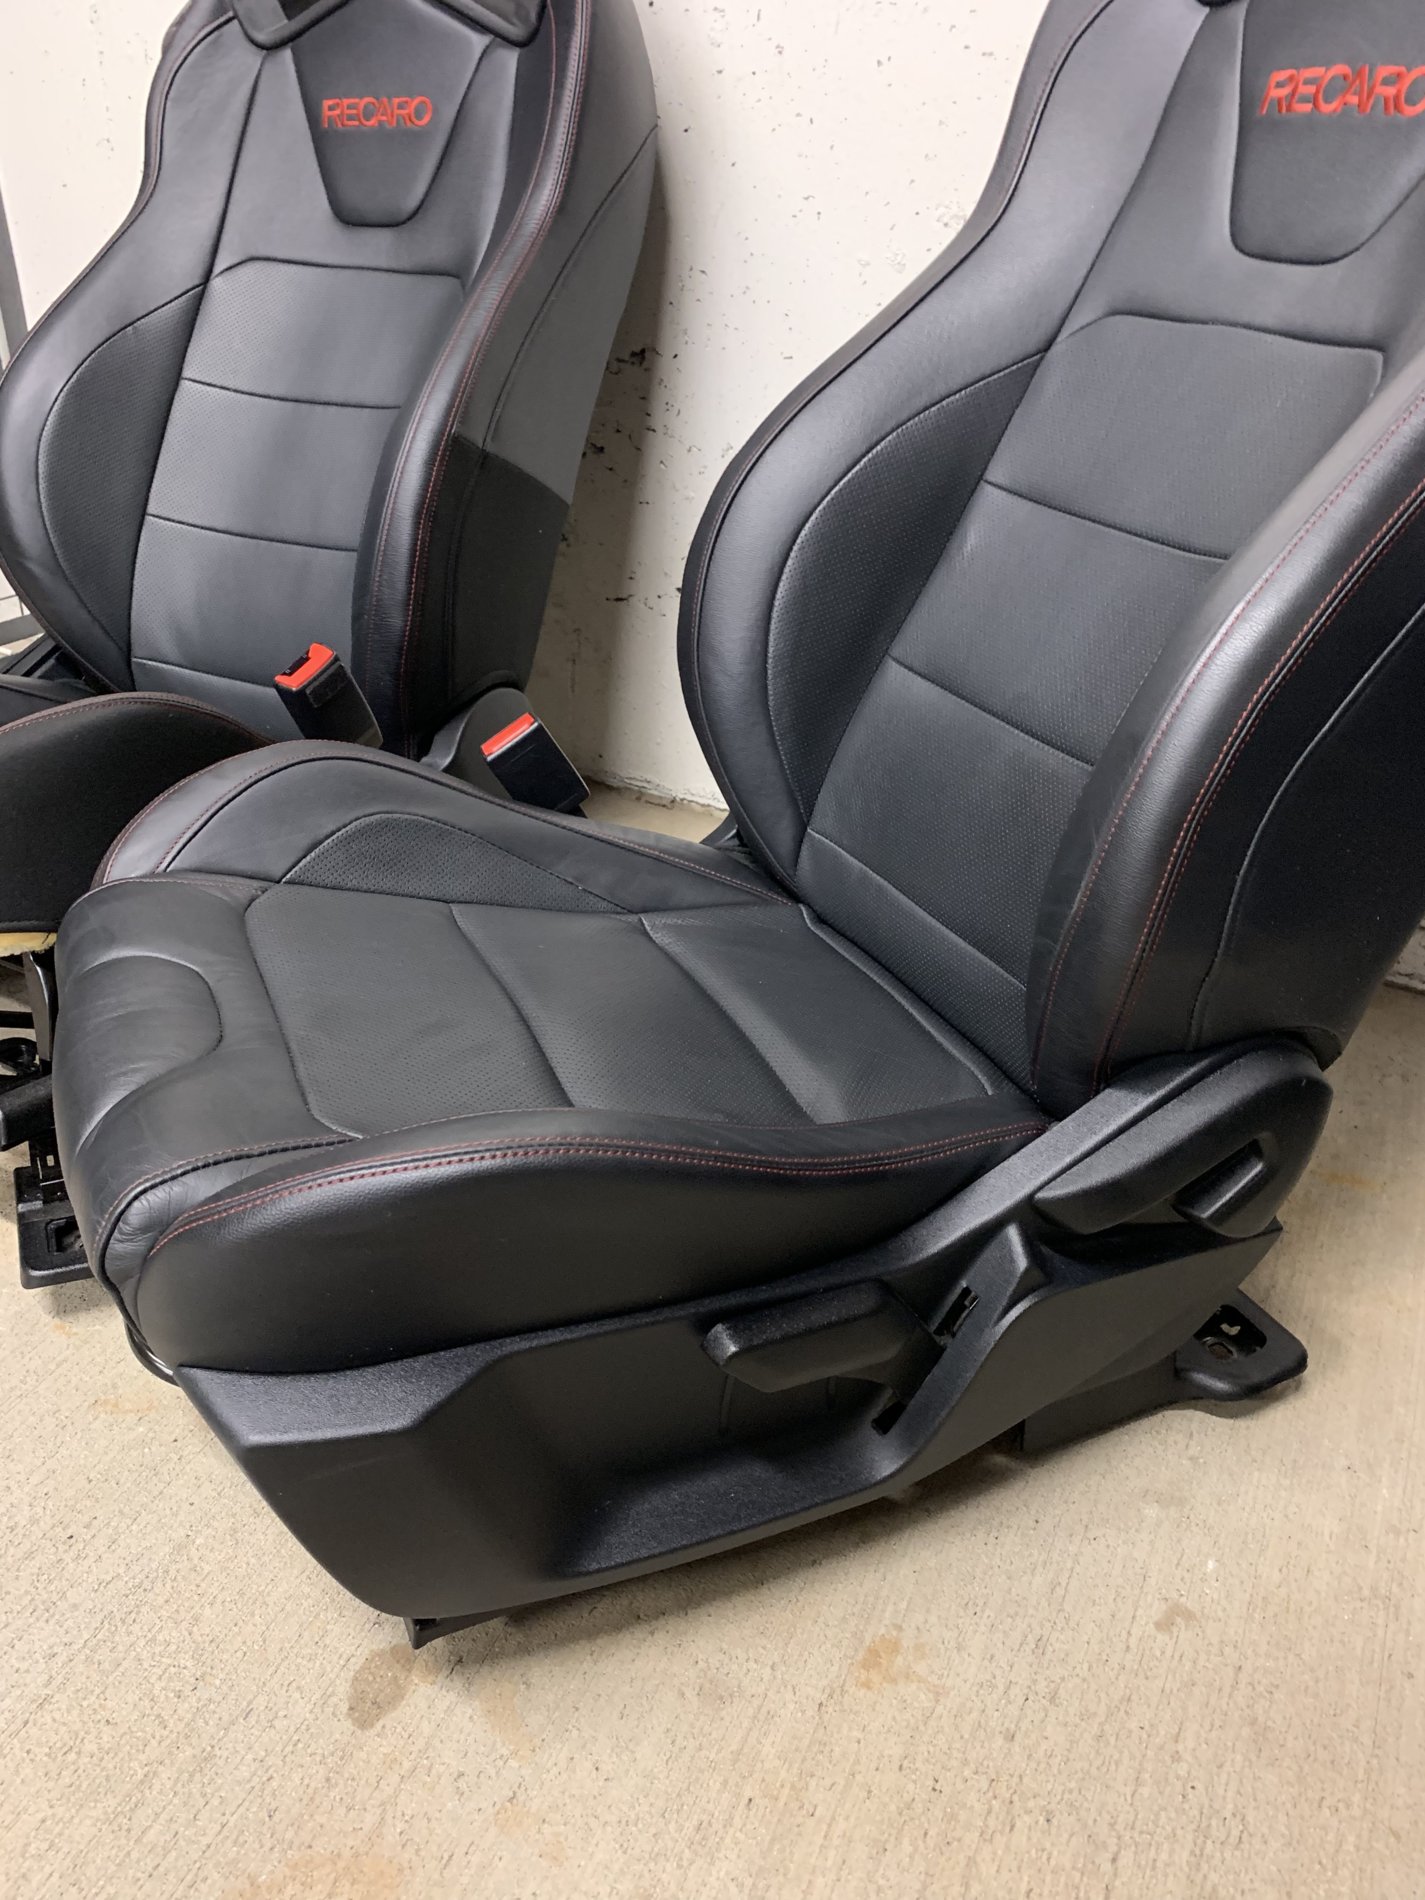 Recaro Leather Seats | 2015+ S550 Mustang Forum (GT, EcoBoost, GT350